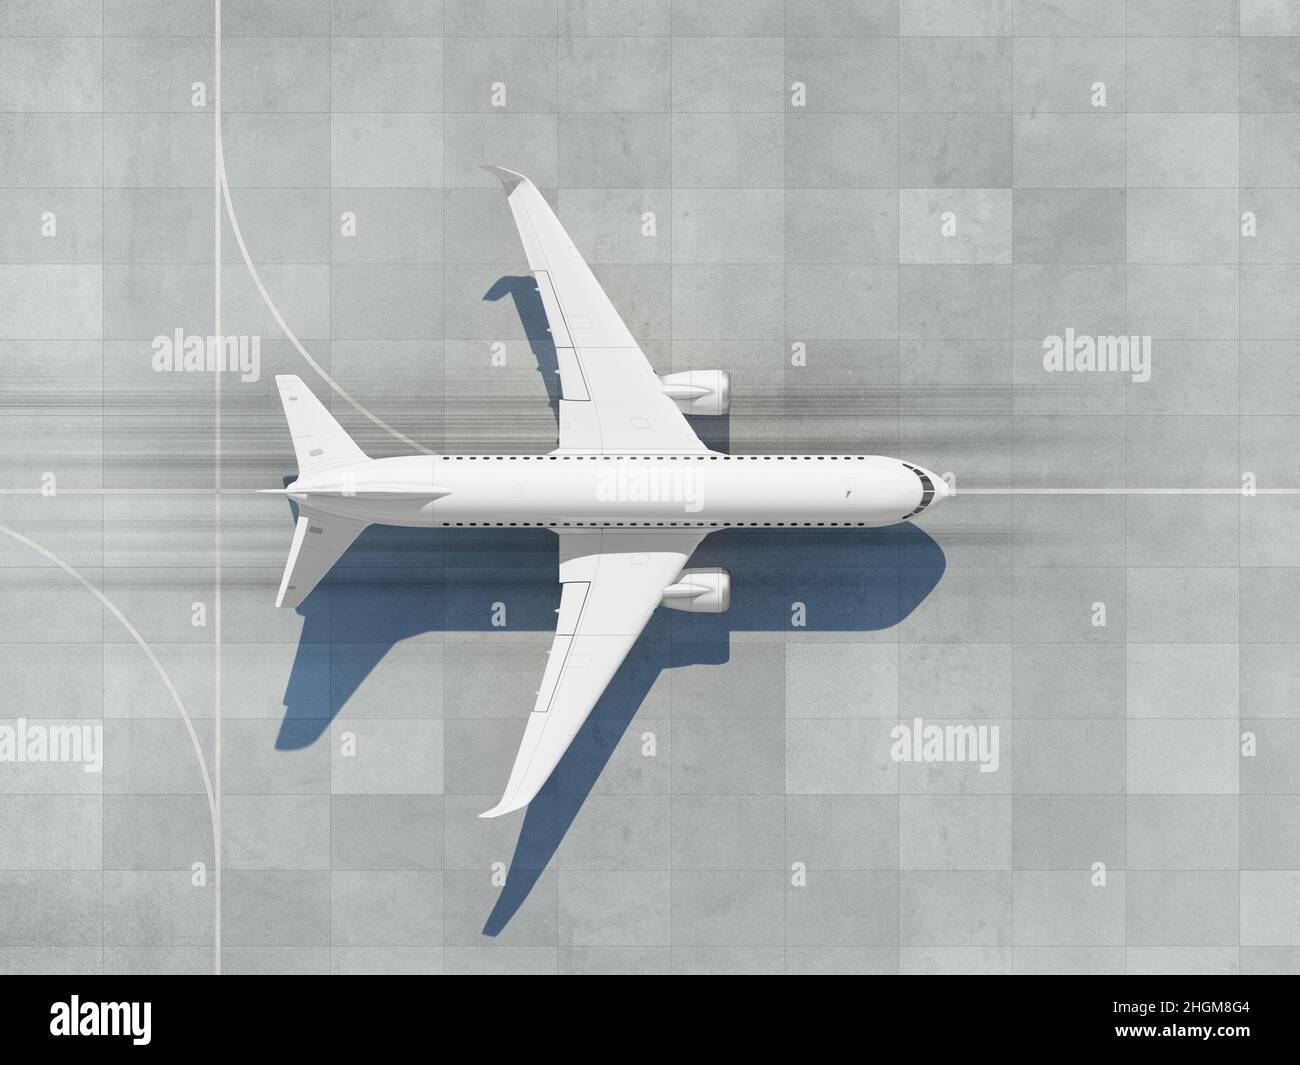 Aeroplane on runway ready to takeoff, illustration Stock Photo